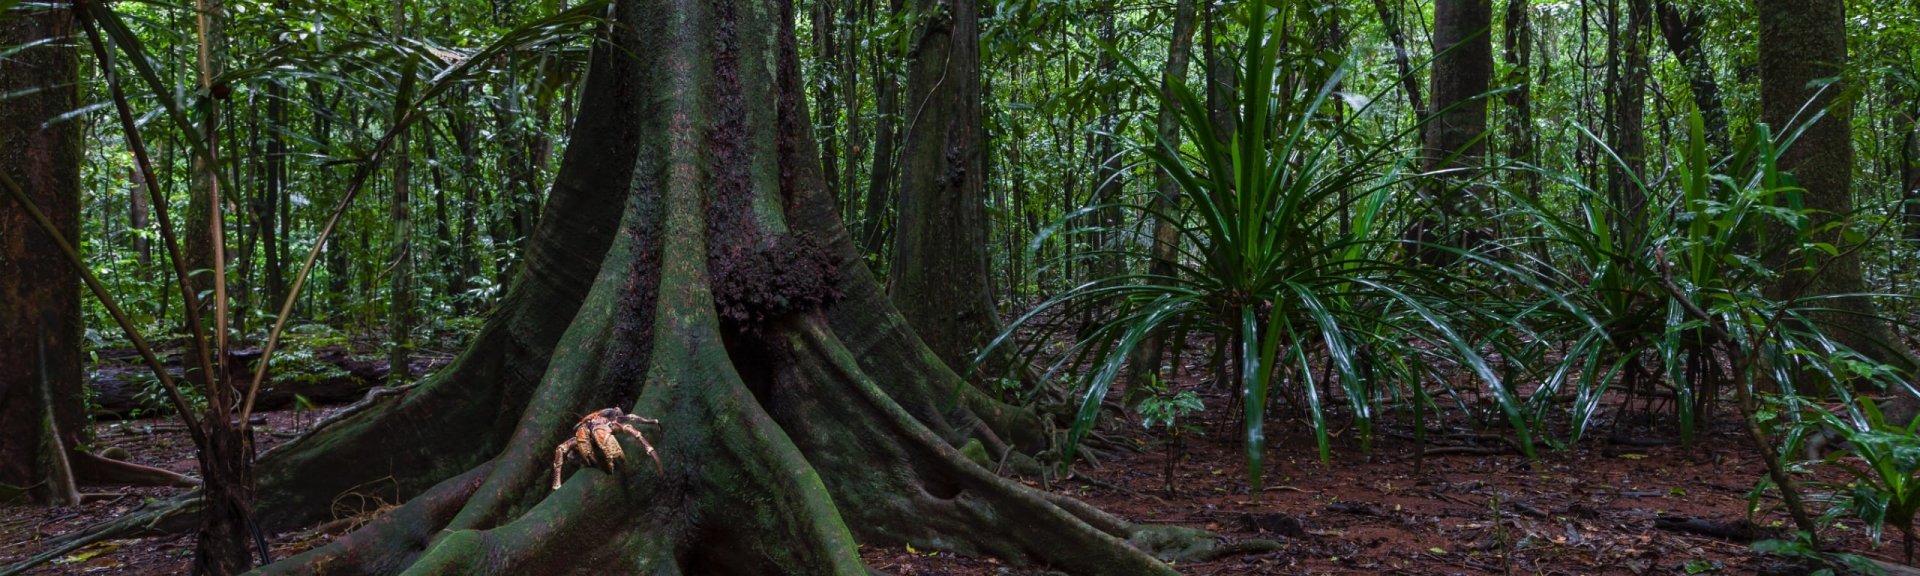 Robber crab in the rainforest. Credit: [Wondrous World Images](https://www.wondrousworldimages.com.au)